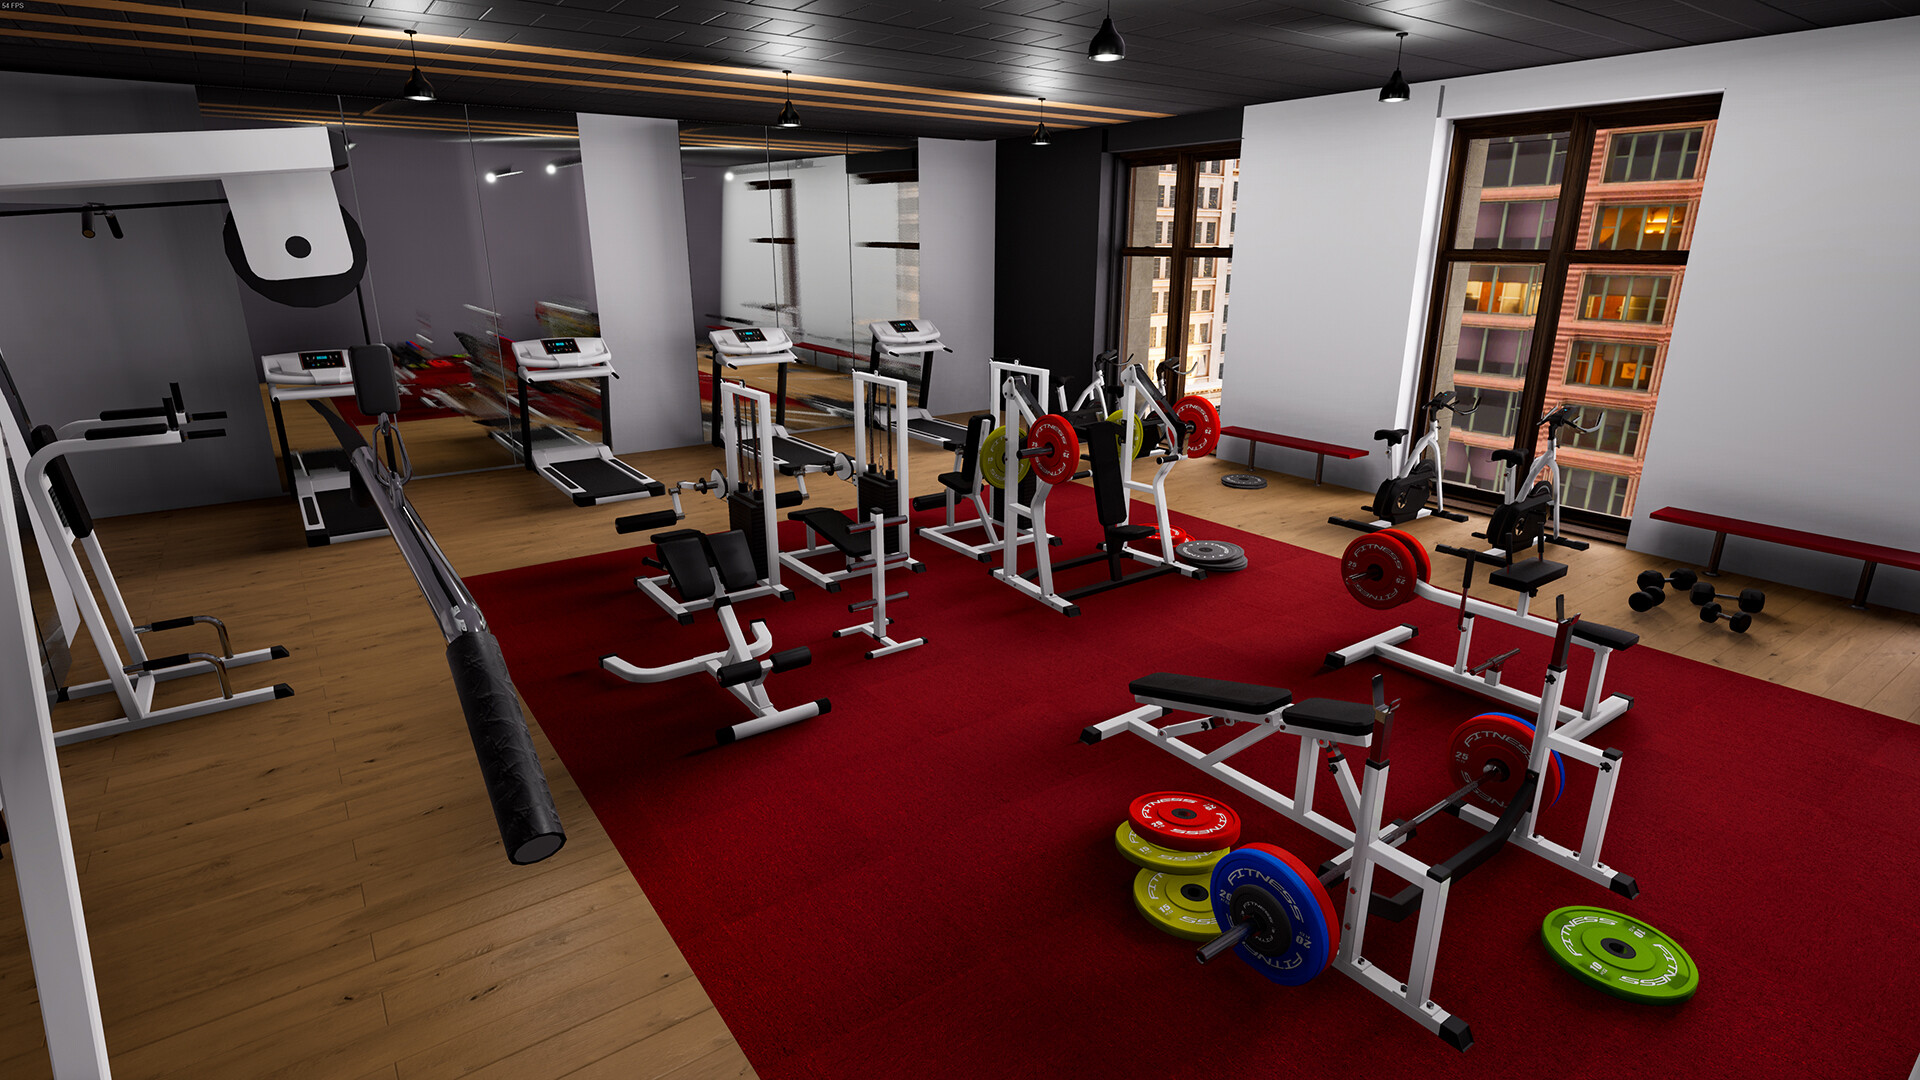 Hotel Renovator - Gym DLC * STEAM RU ⚡ AUTO 💳0%